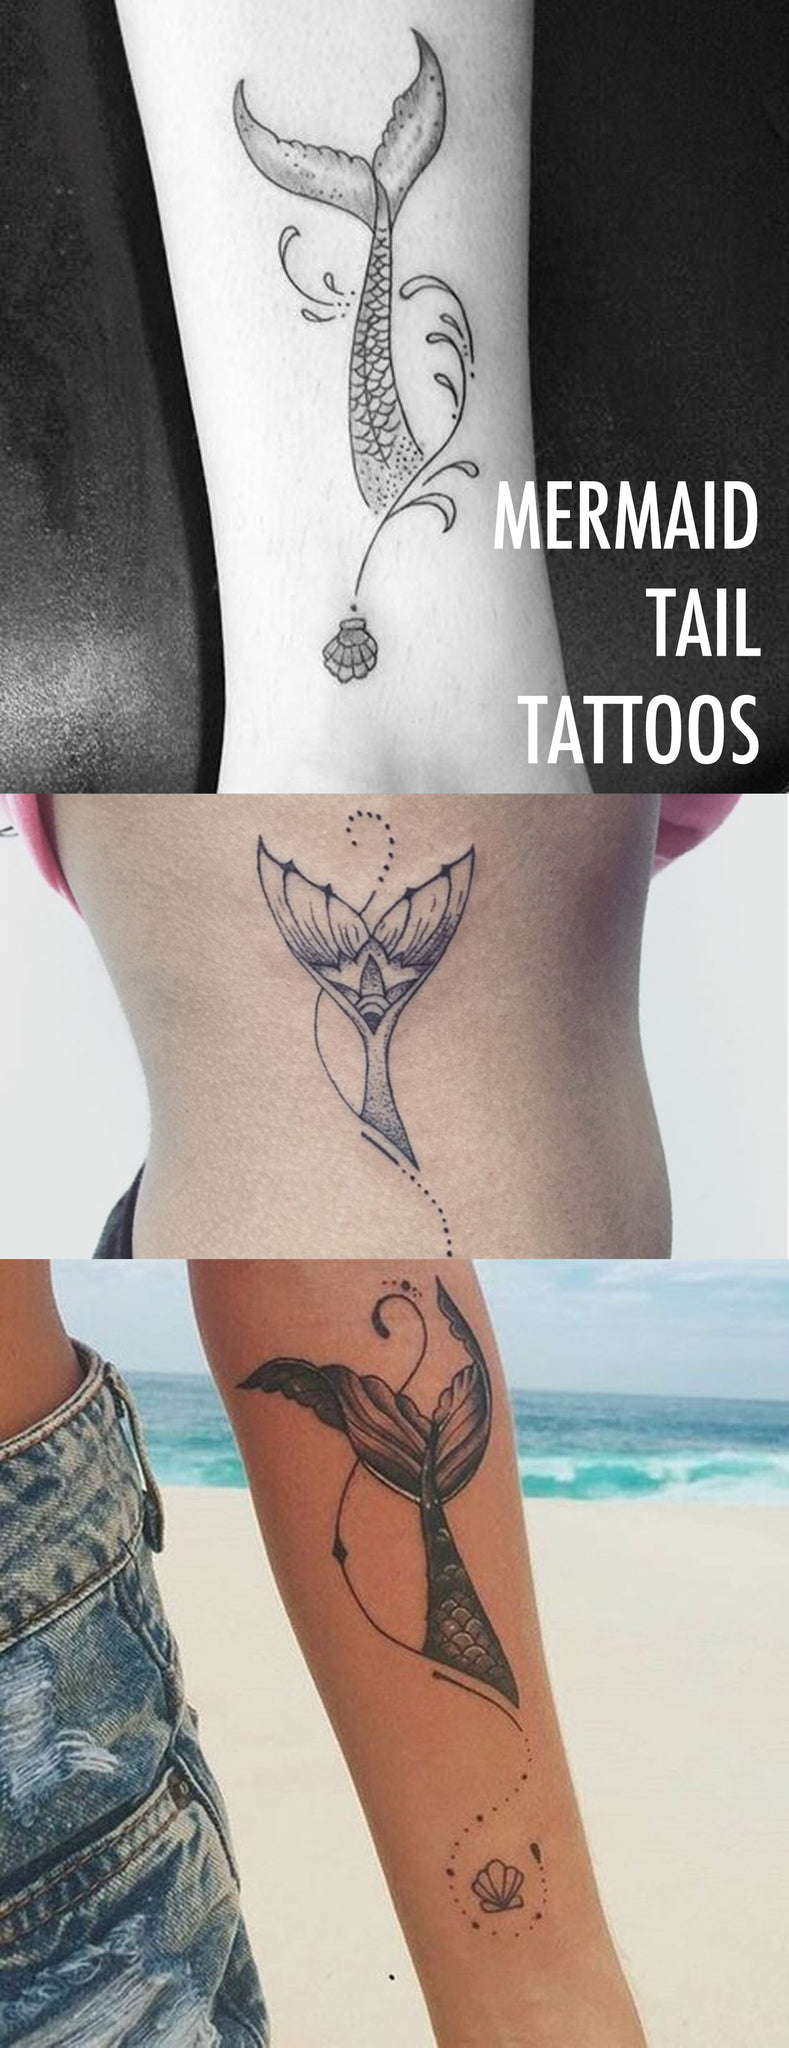 Mermaid Tail Tattoo Ideas for Women at MyBodiArt.com - Small Black Arm Sleeve Seashell Rib Tatt